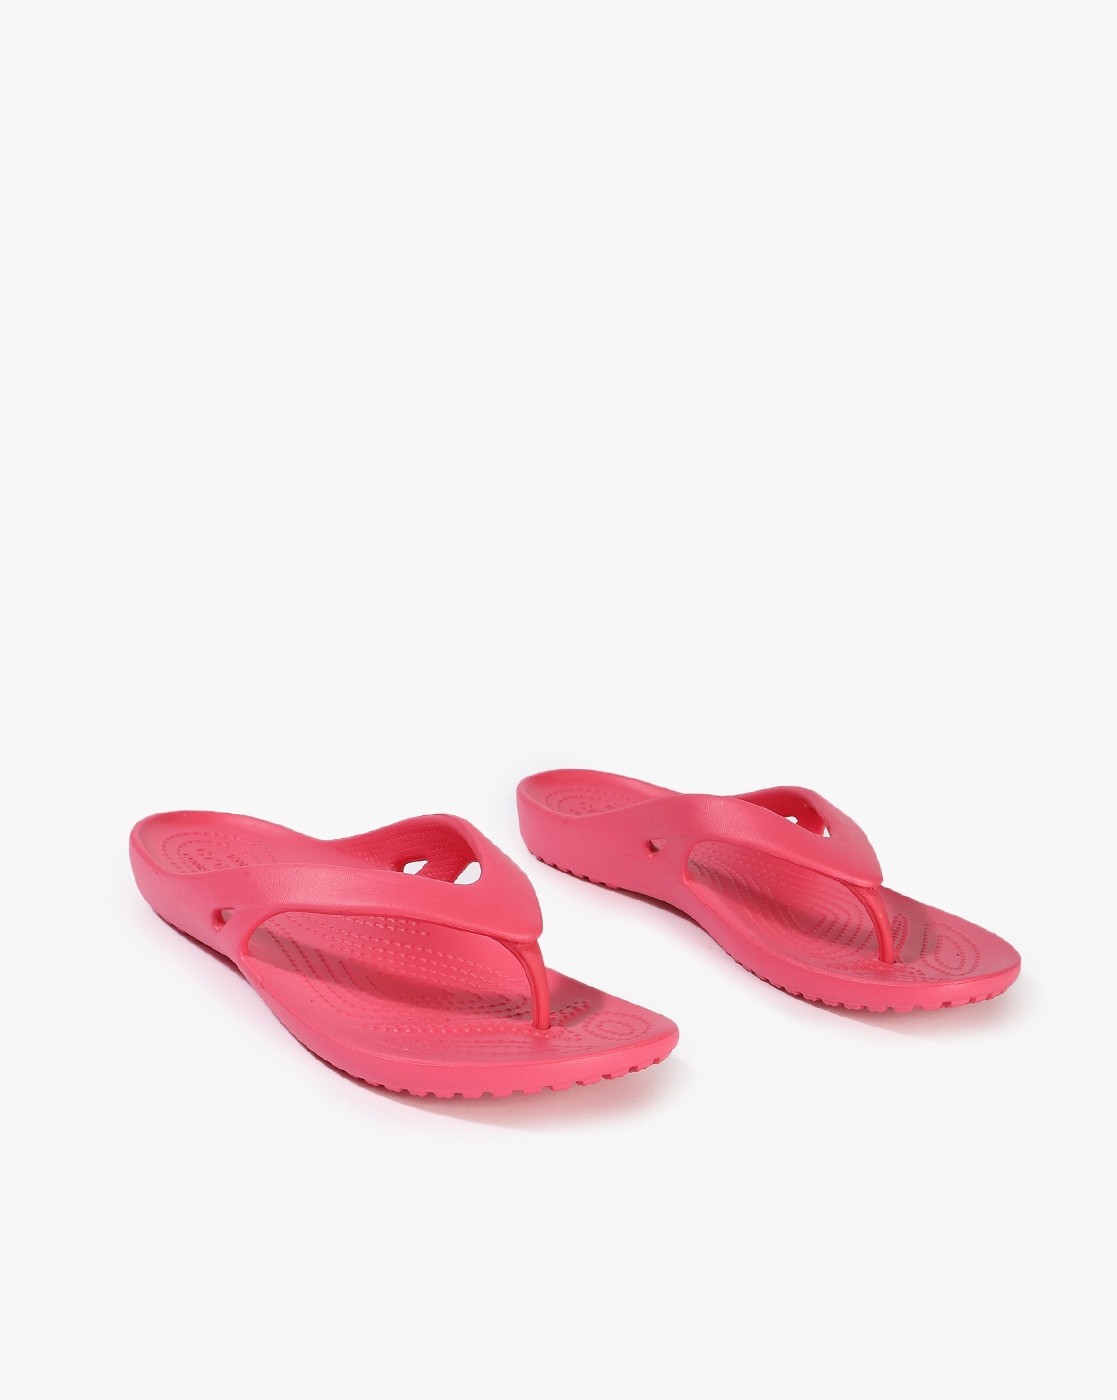 crocs pink slippers